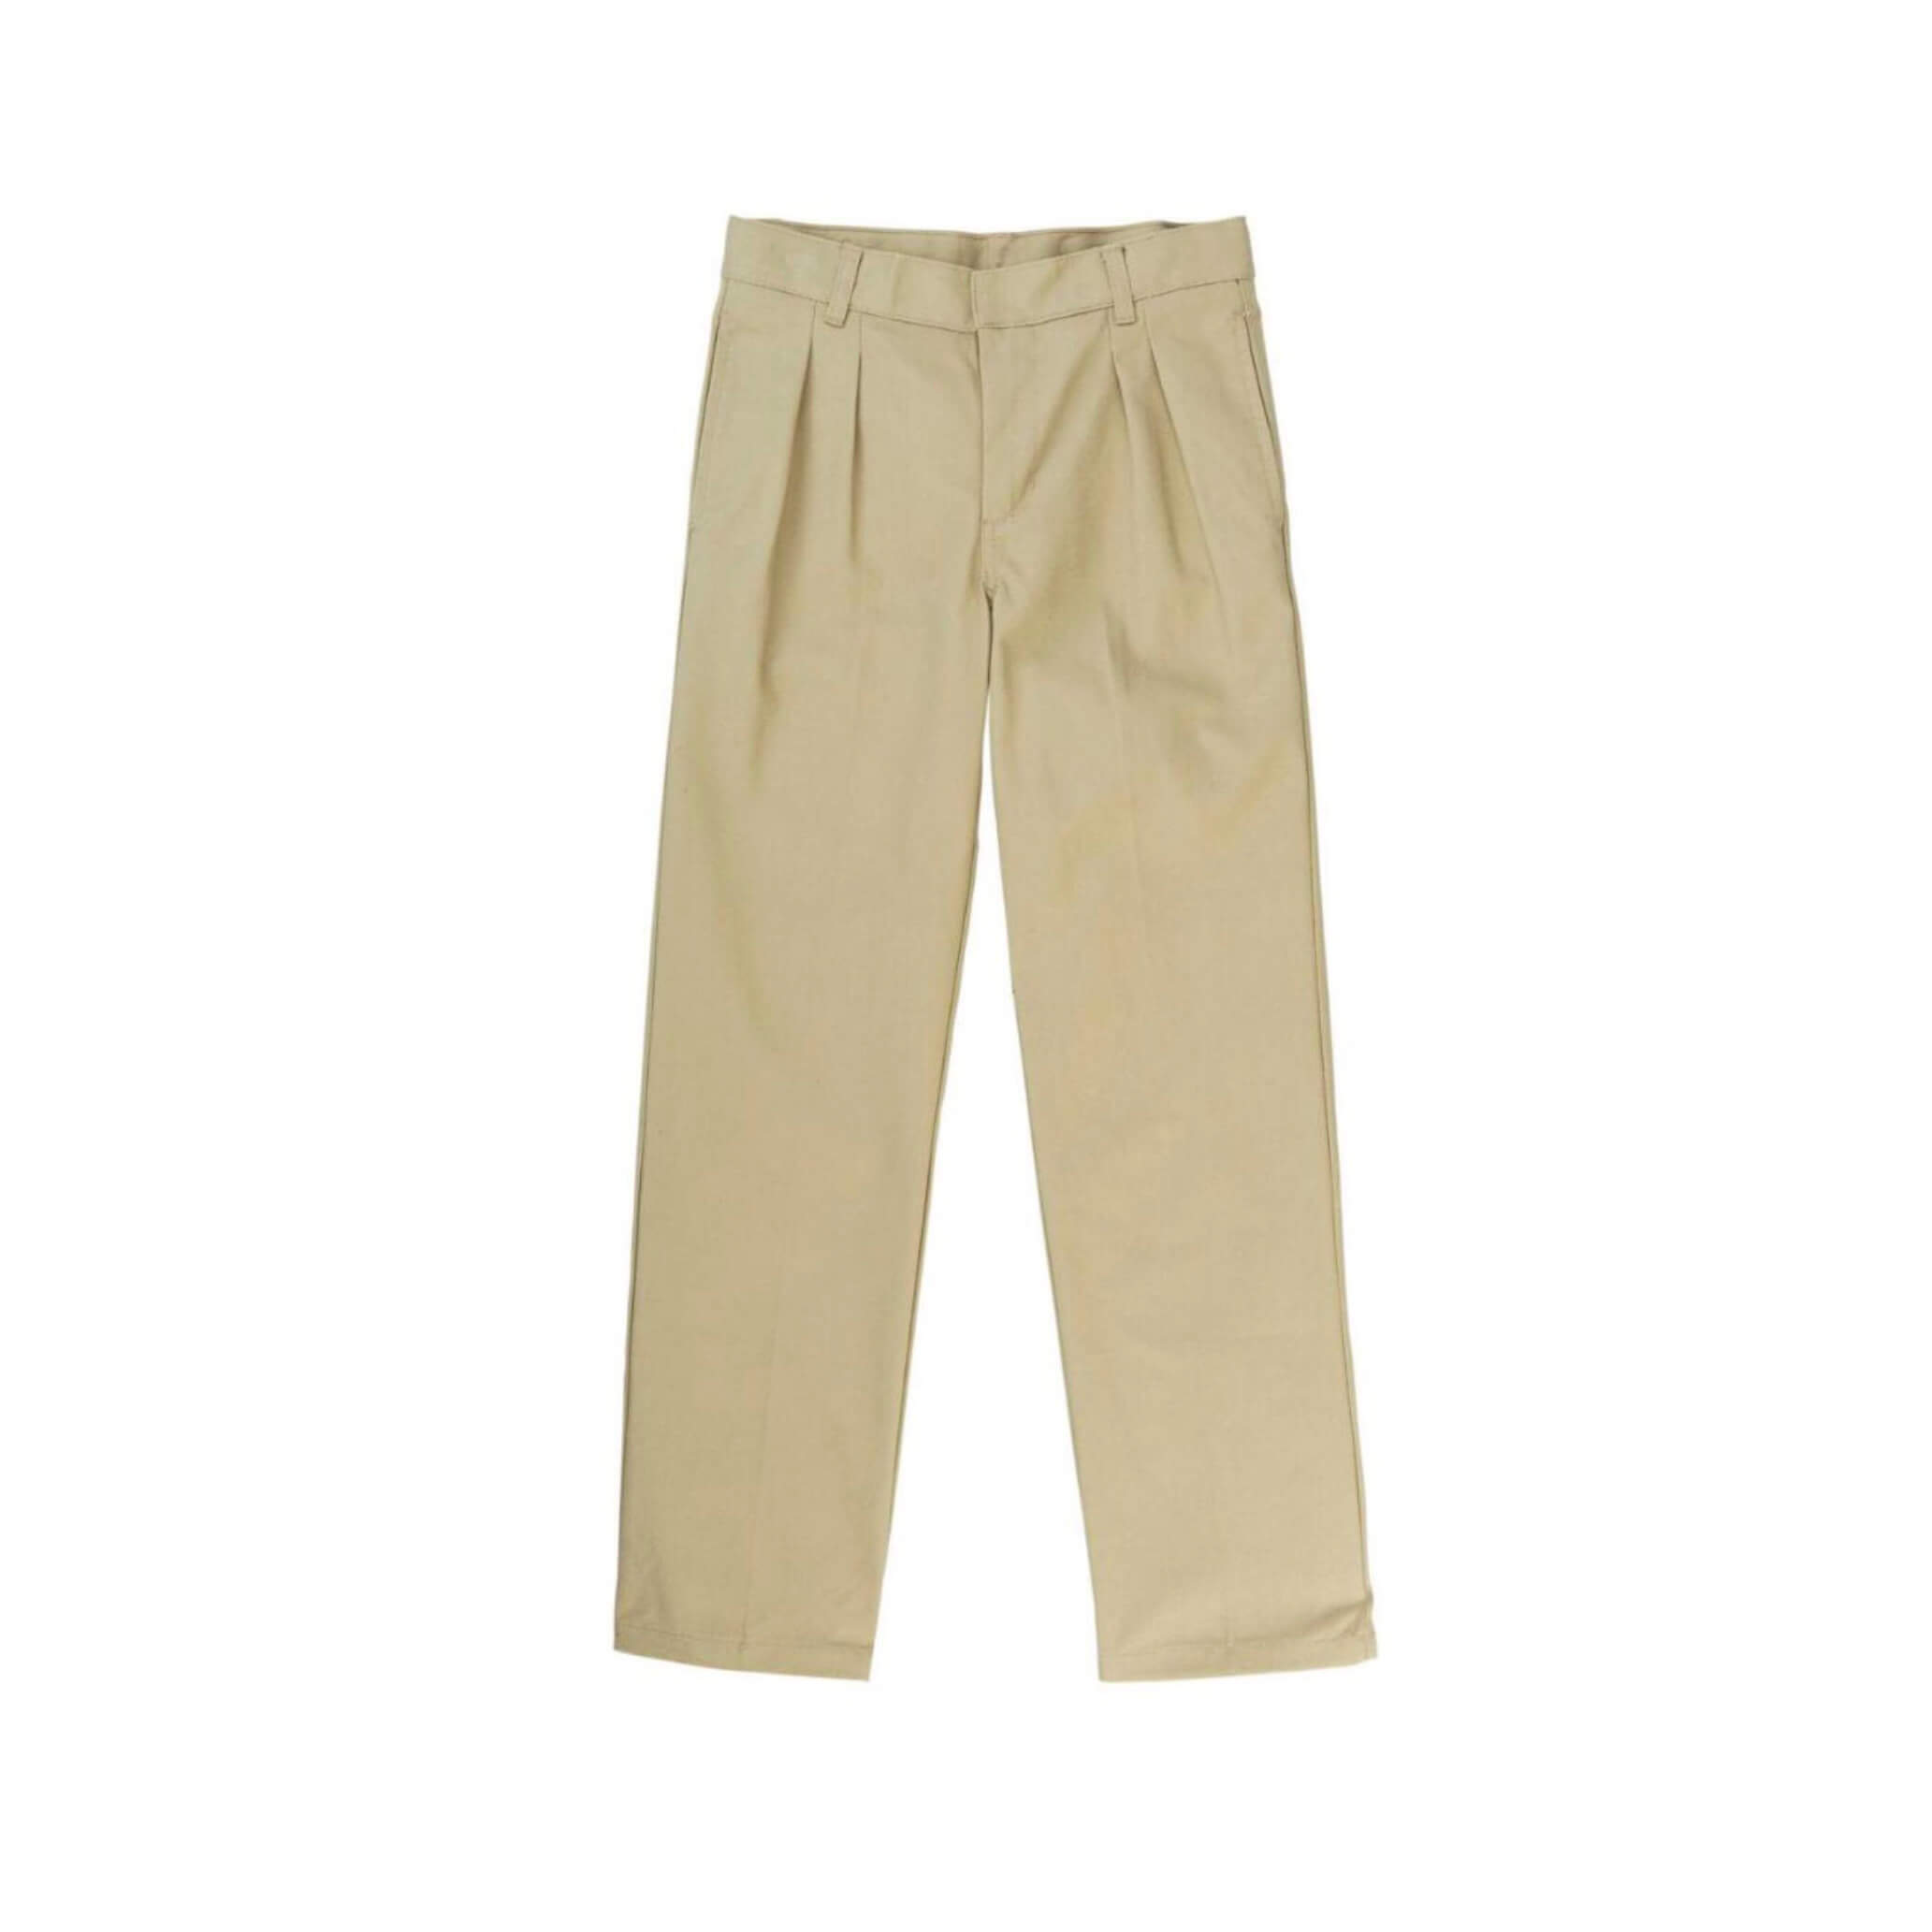 6th/7th Grade – CAMPA Flat Front KHAKI Pants | The League Brand